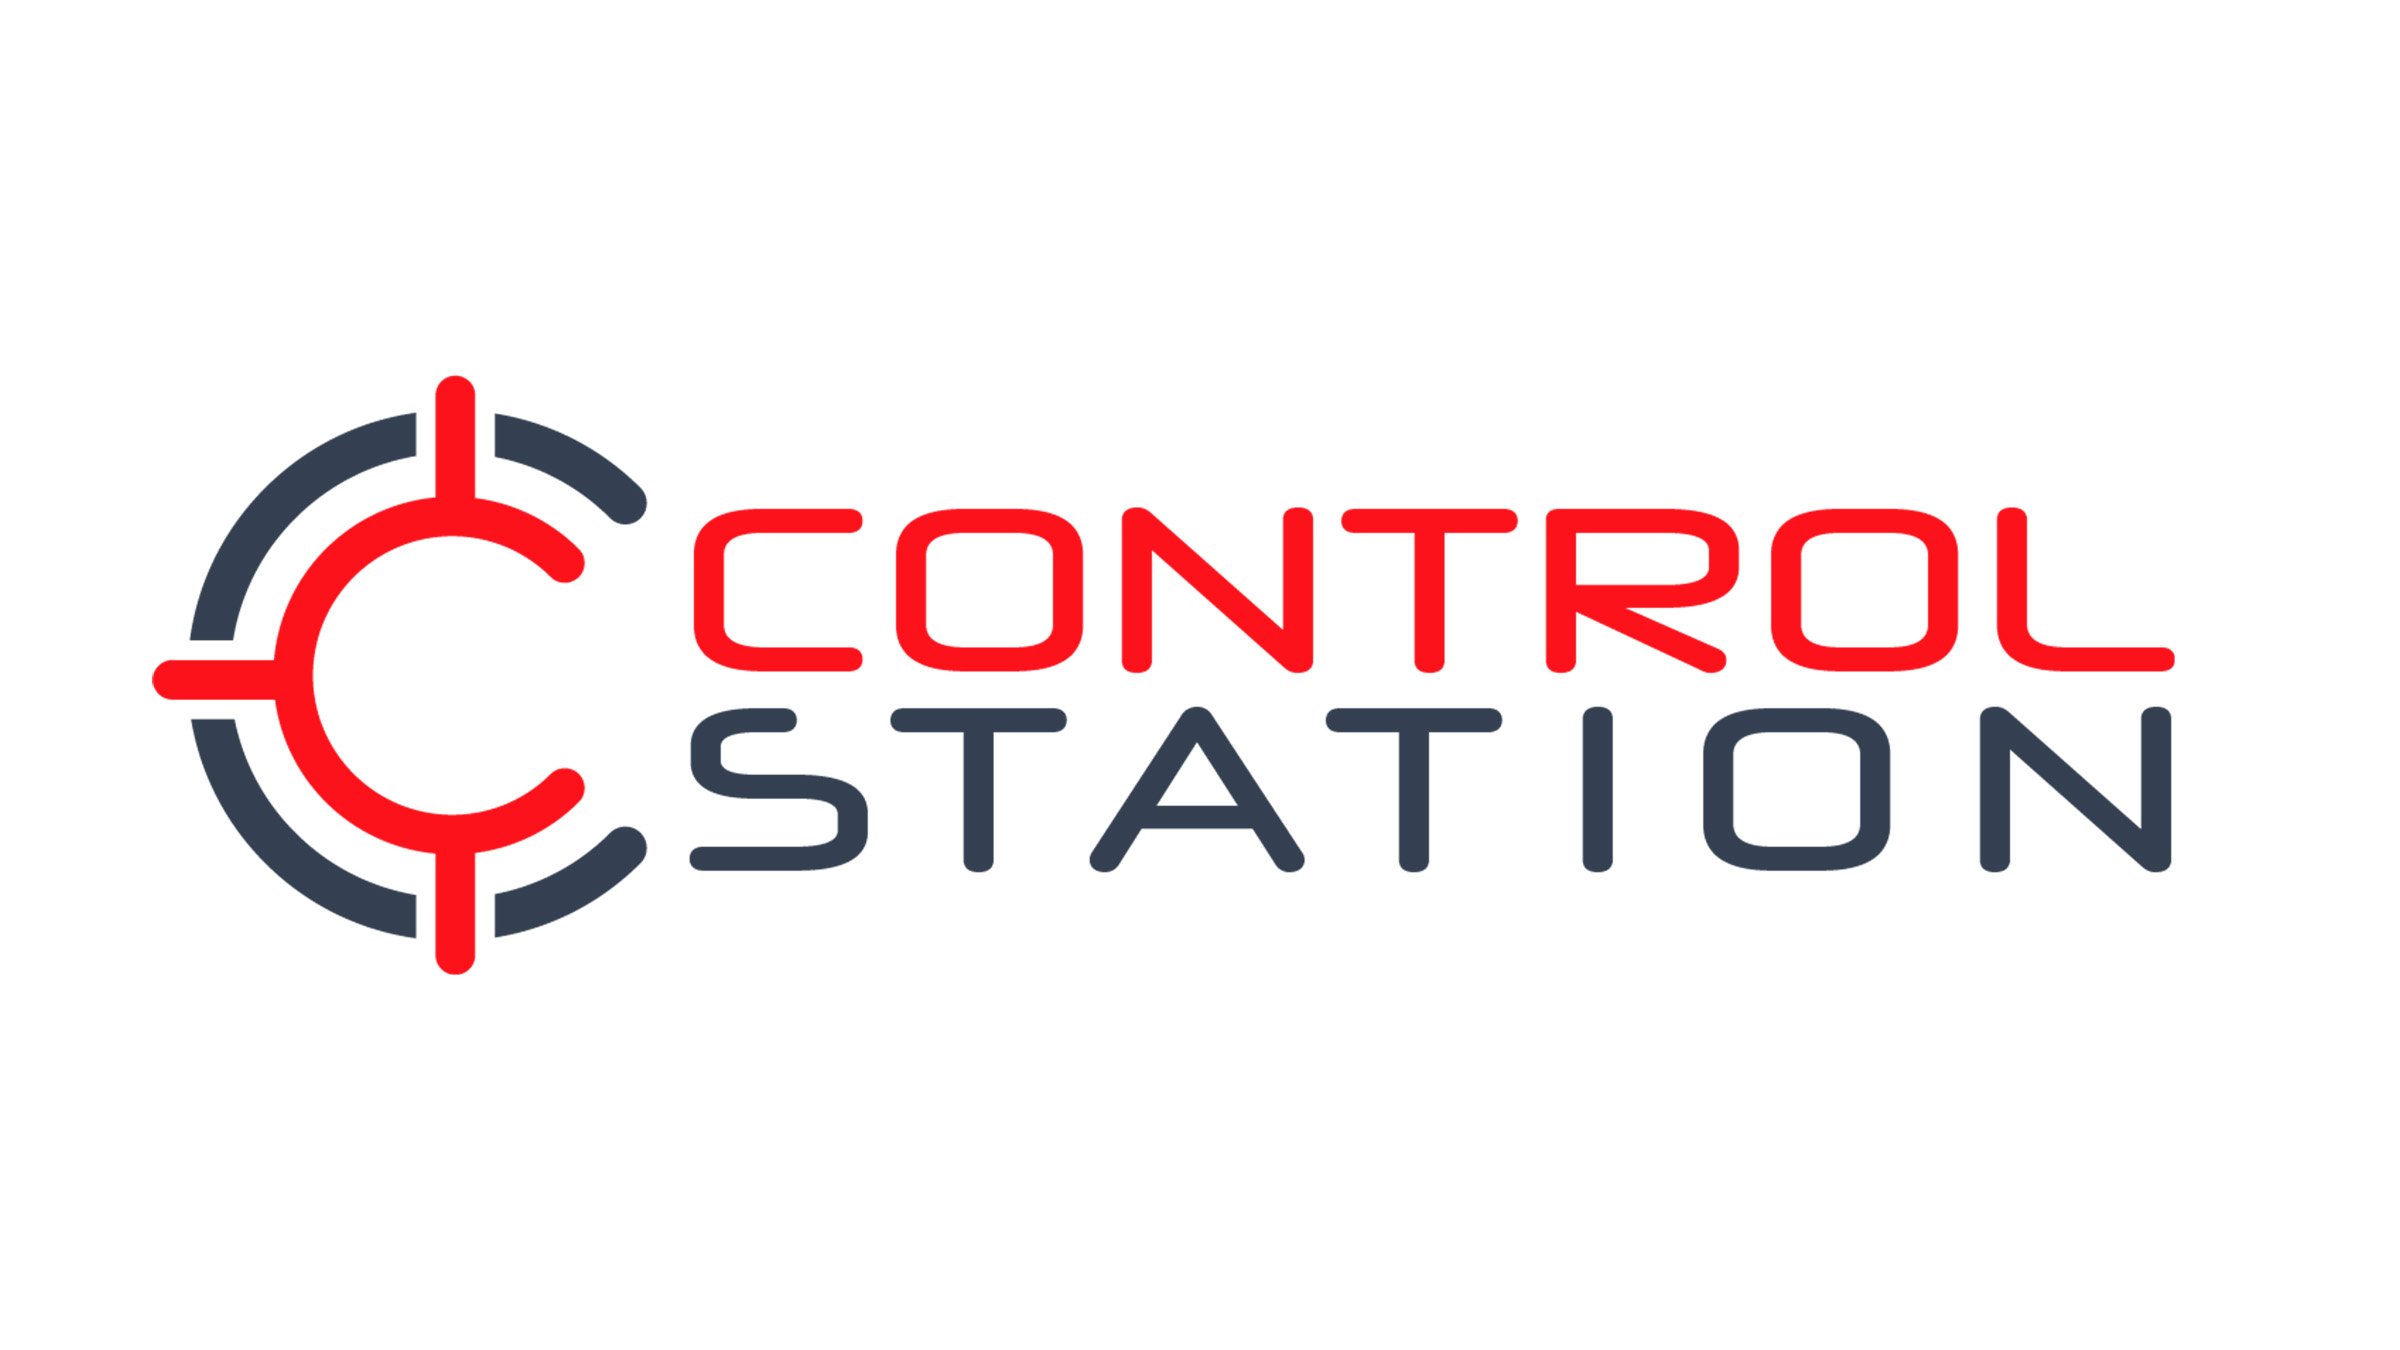 Control Station logo